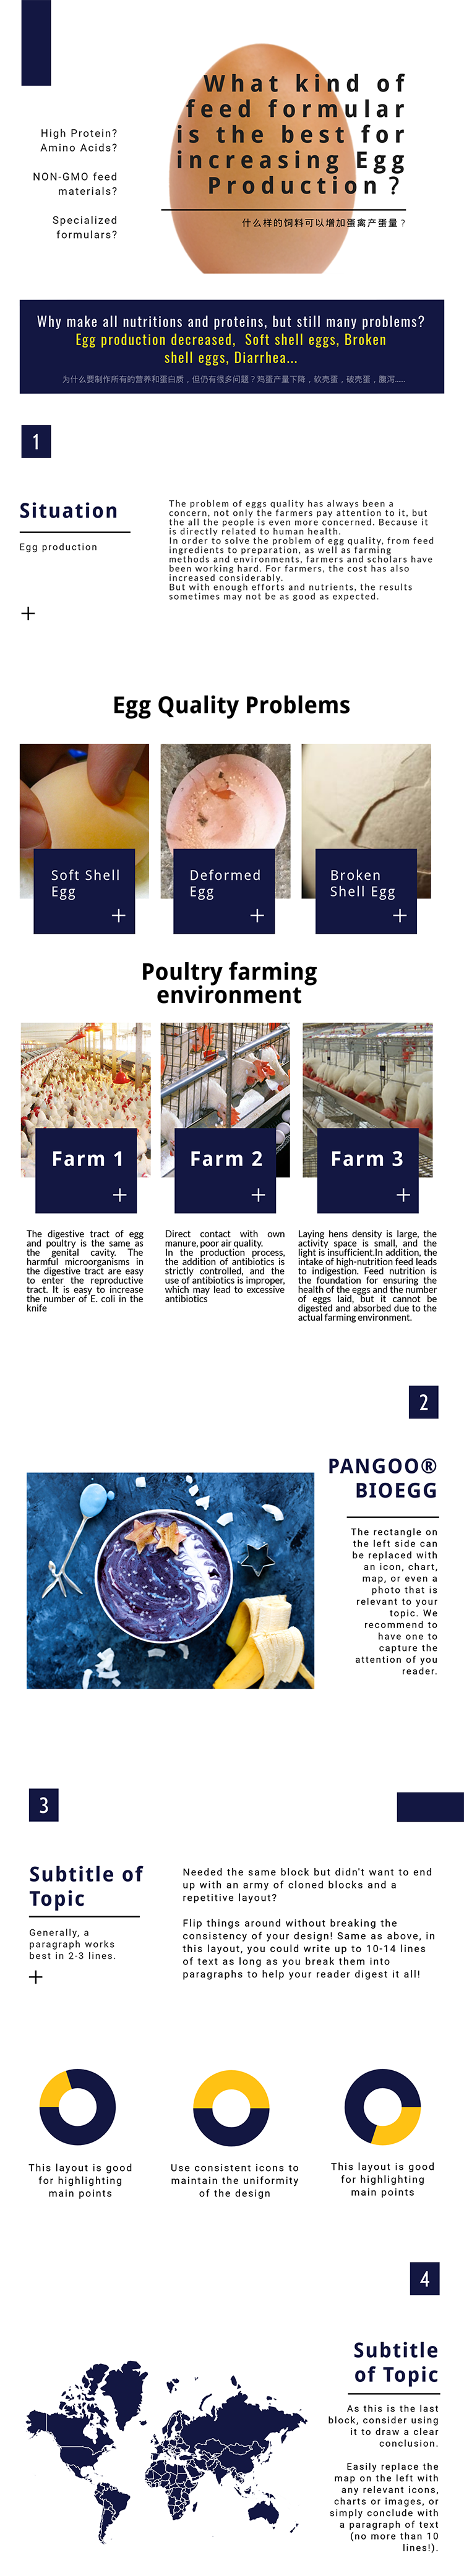 pangoo egg supplements